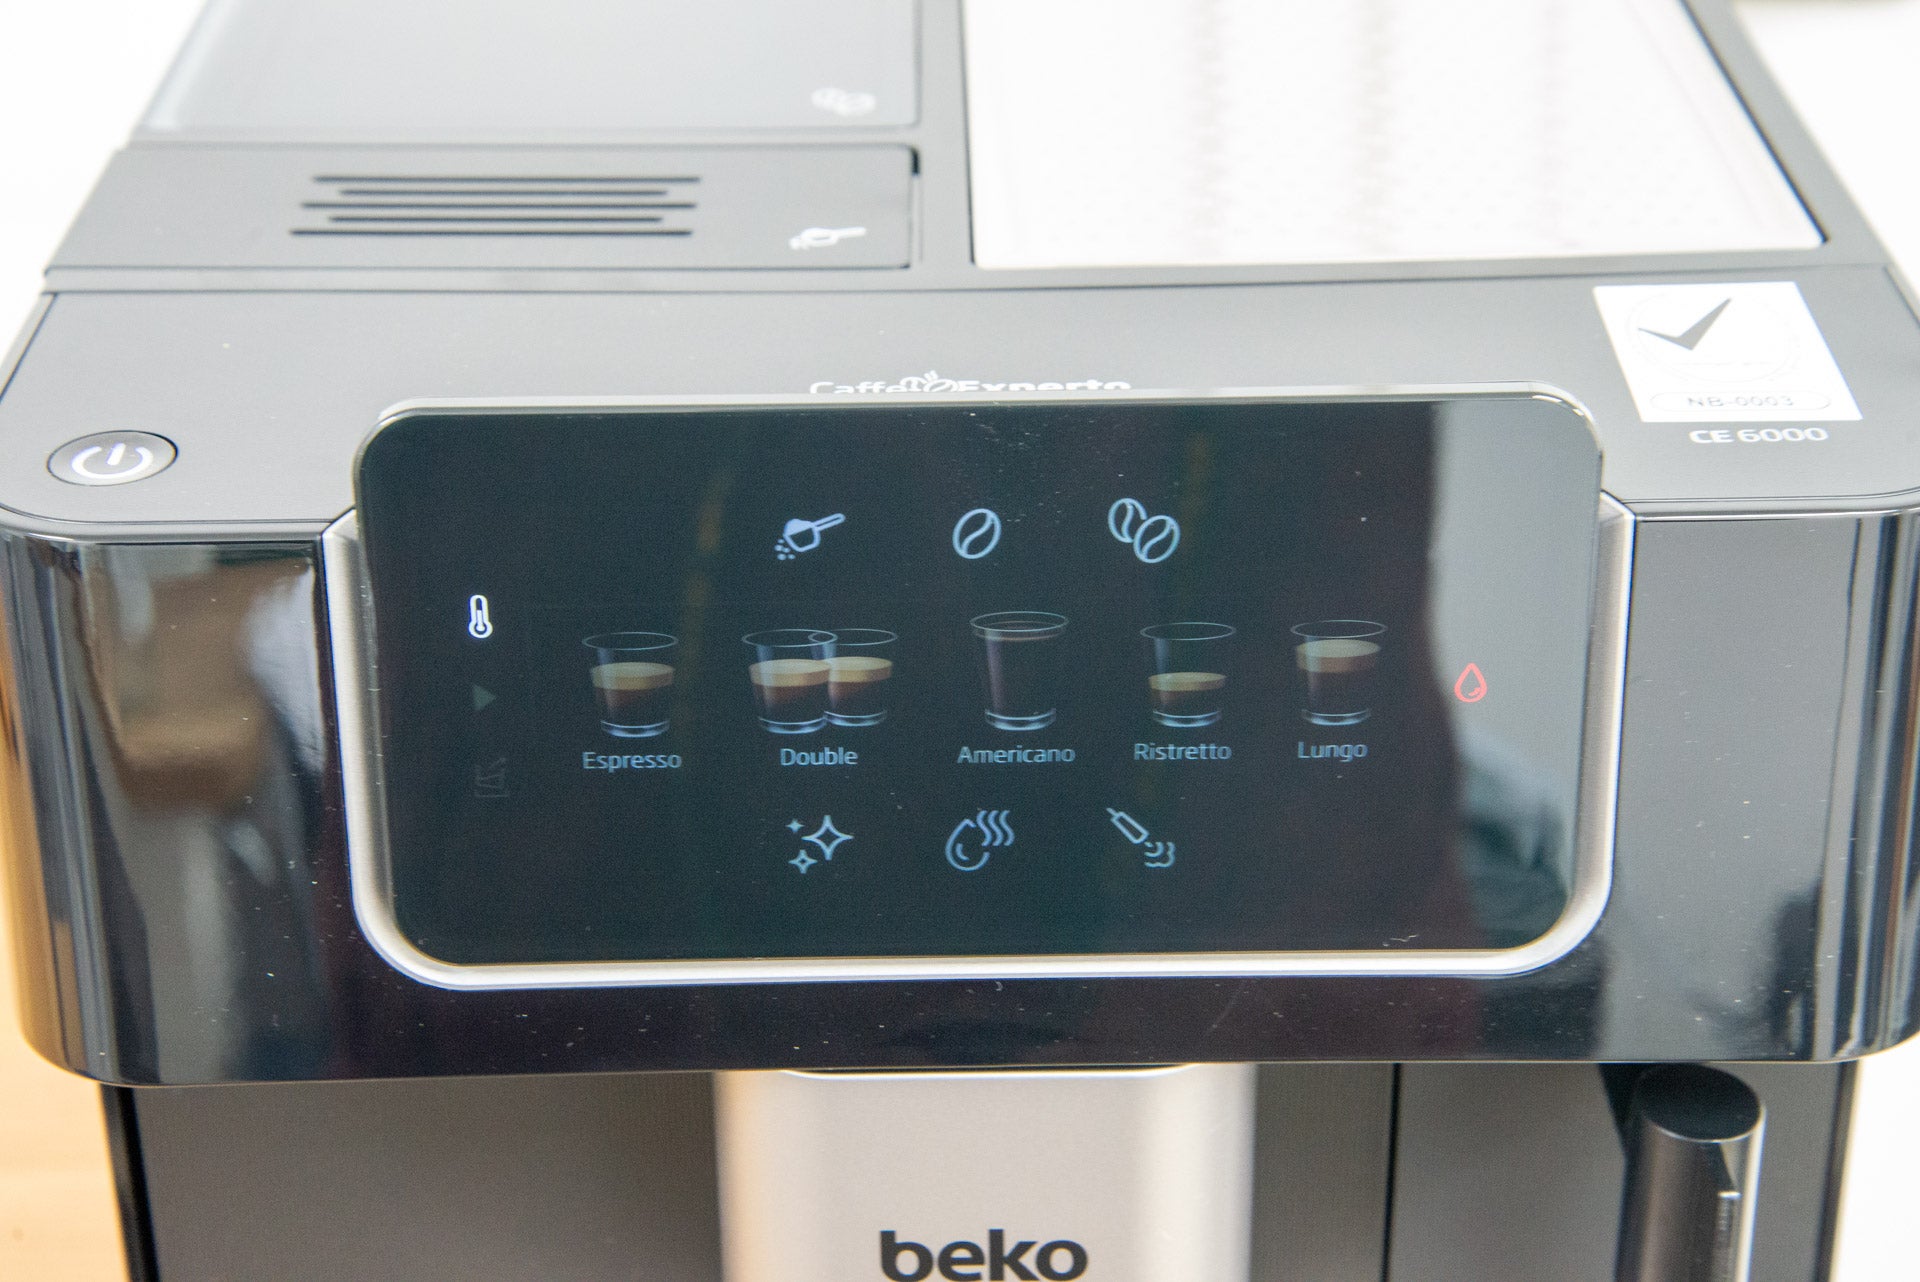 Beko CaffeExperto Bean To Cup Coffee Machine Steam Wand controls